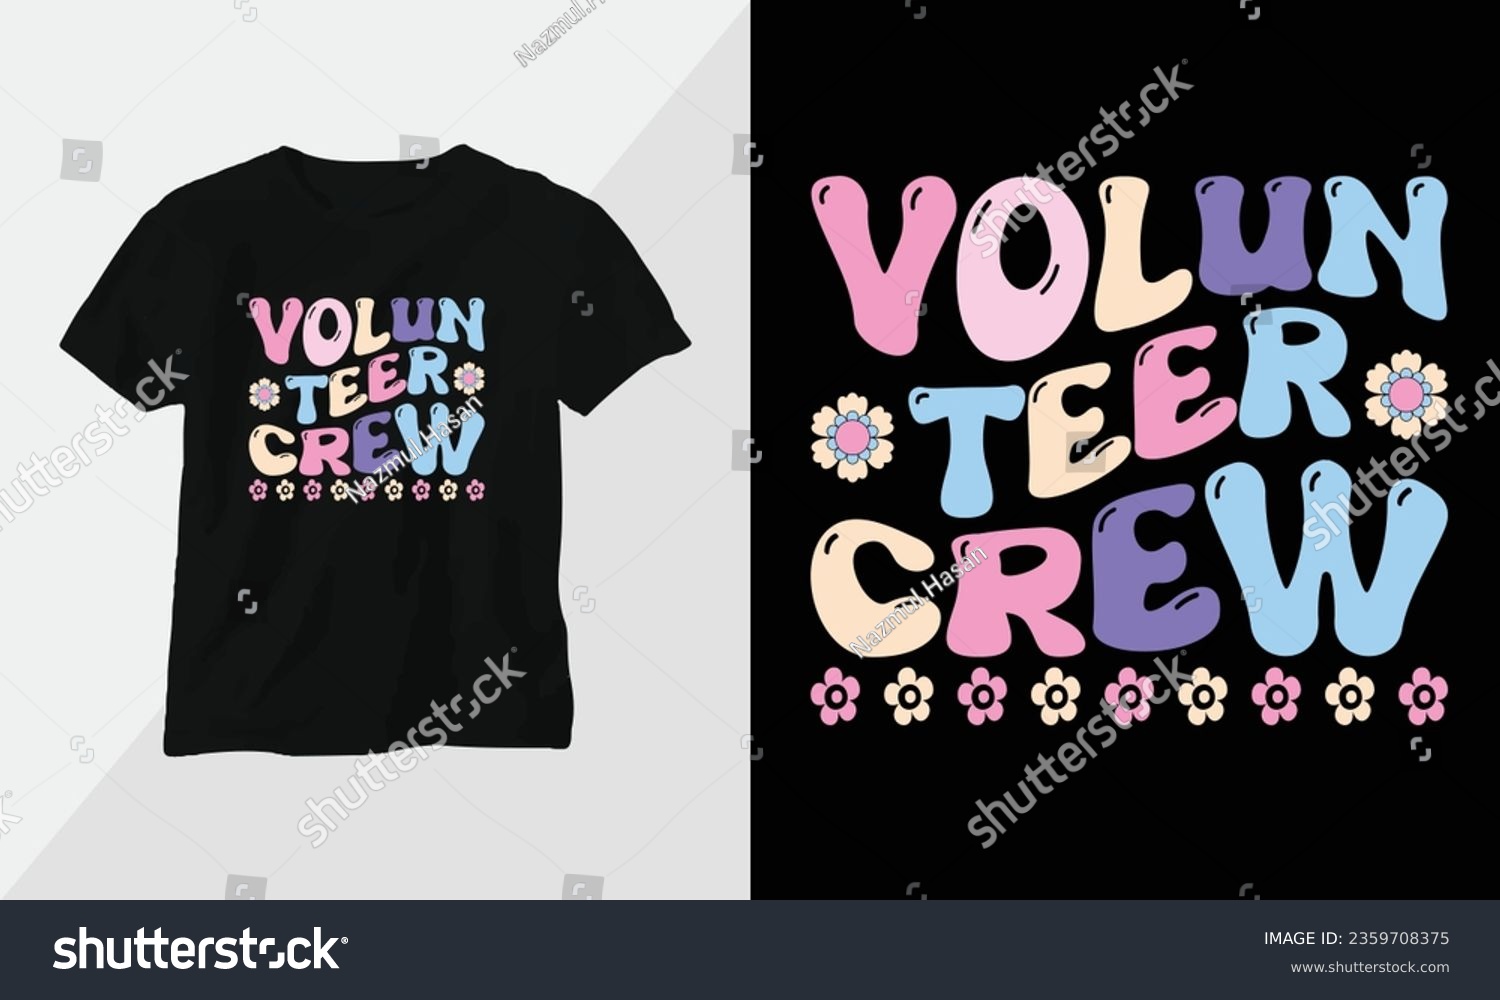 SVG of volunteer crew - Retro Groovy Inspirational T-shirt Design with retro style svg